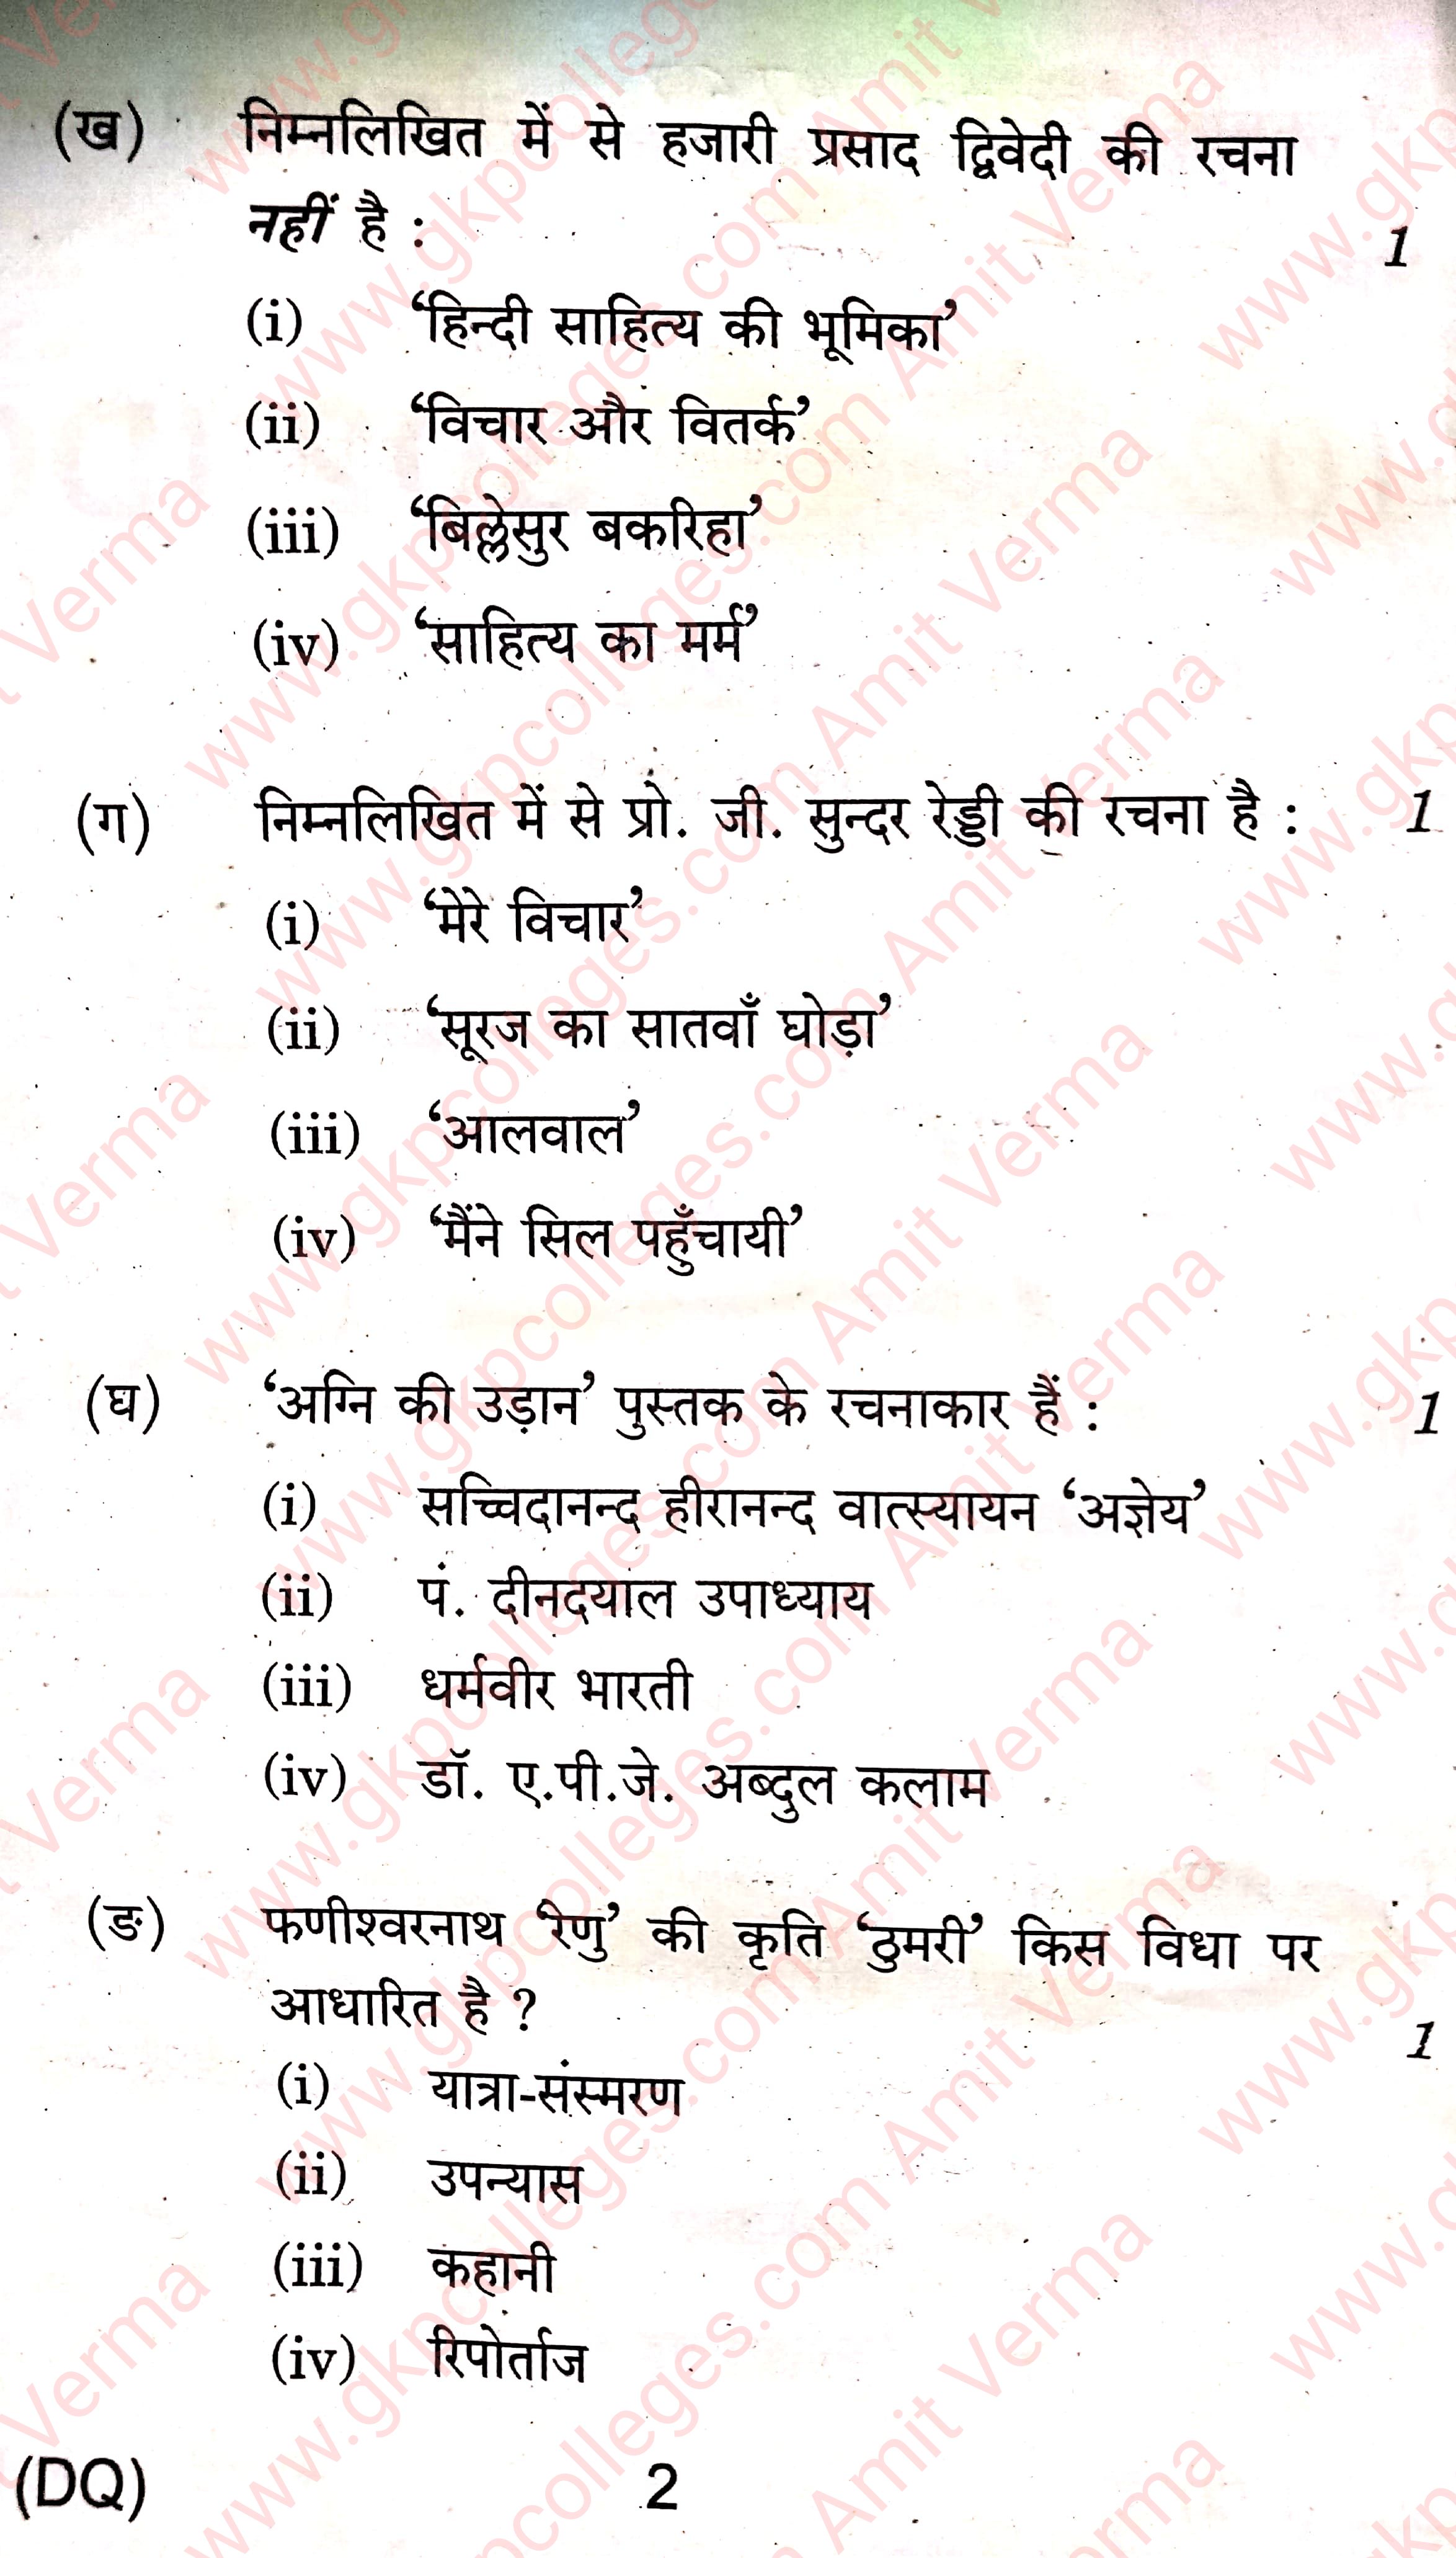 Hindi, UP Board 12th (Intermediate) 2022 Question Paper with full solution, हिंदी क्वेश्चन पेपर का संपूर्ण हल